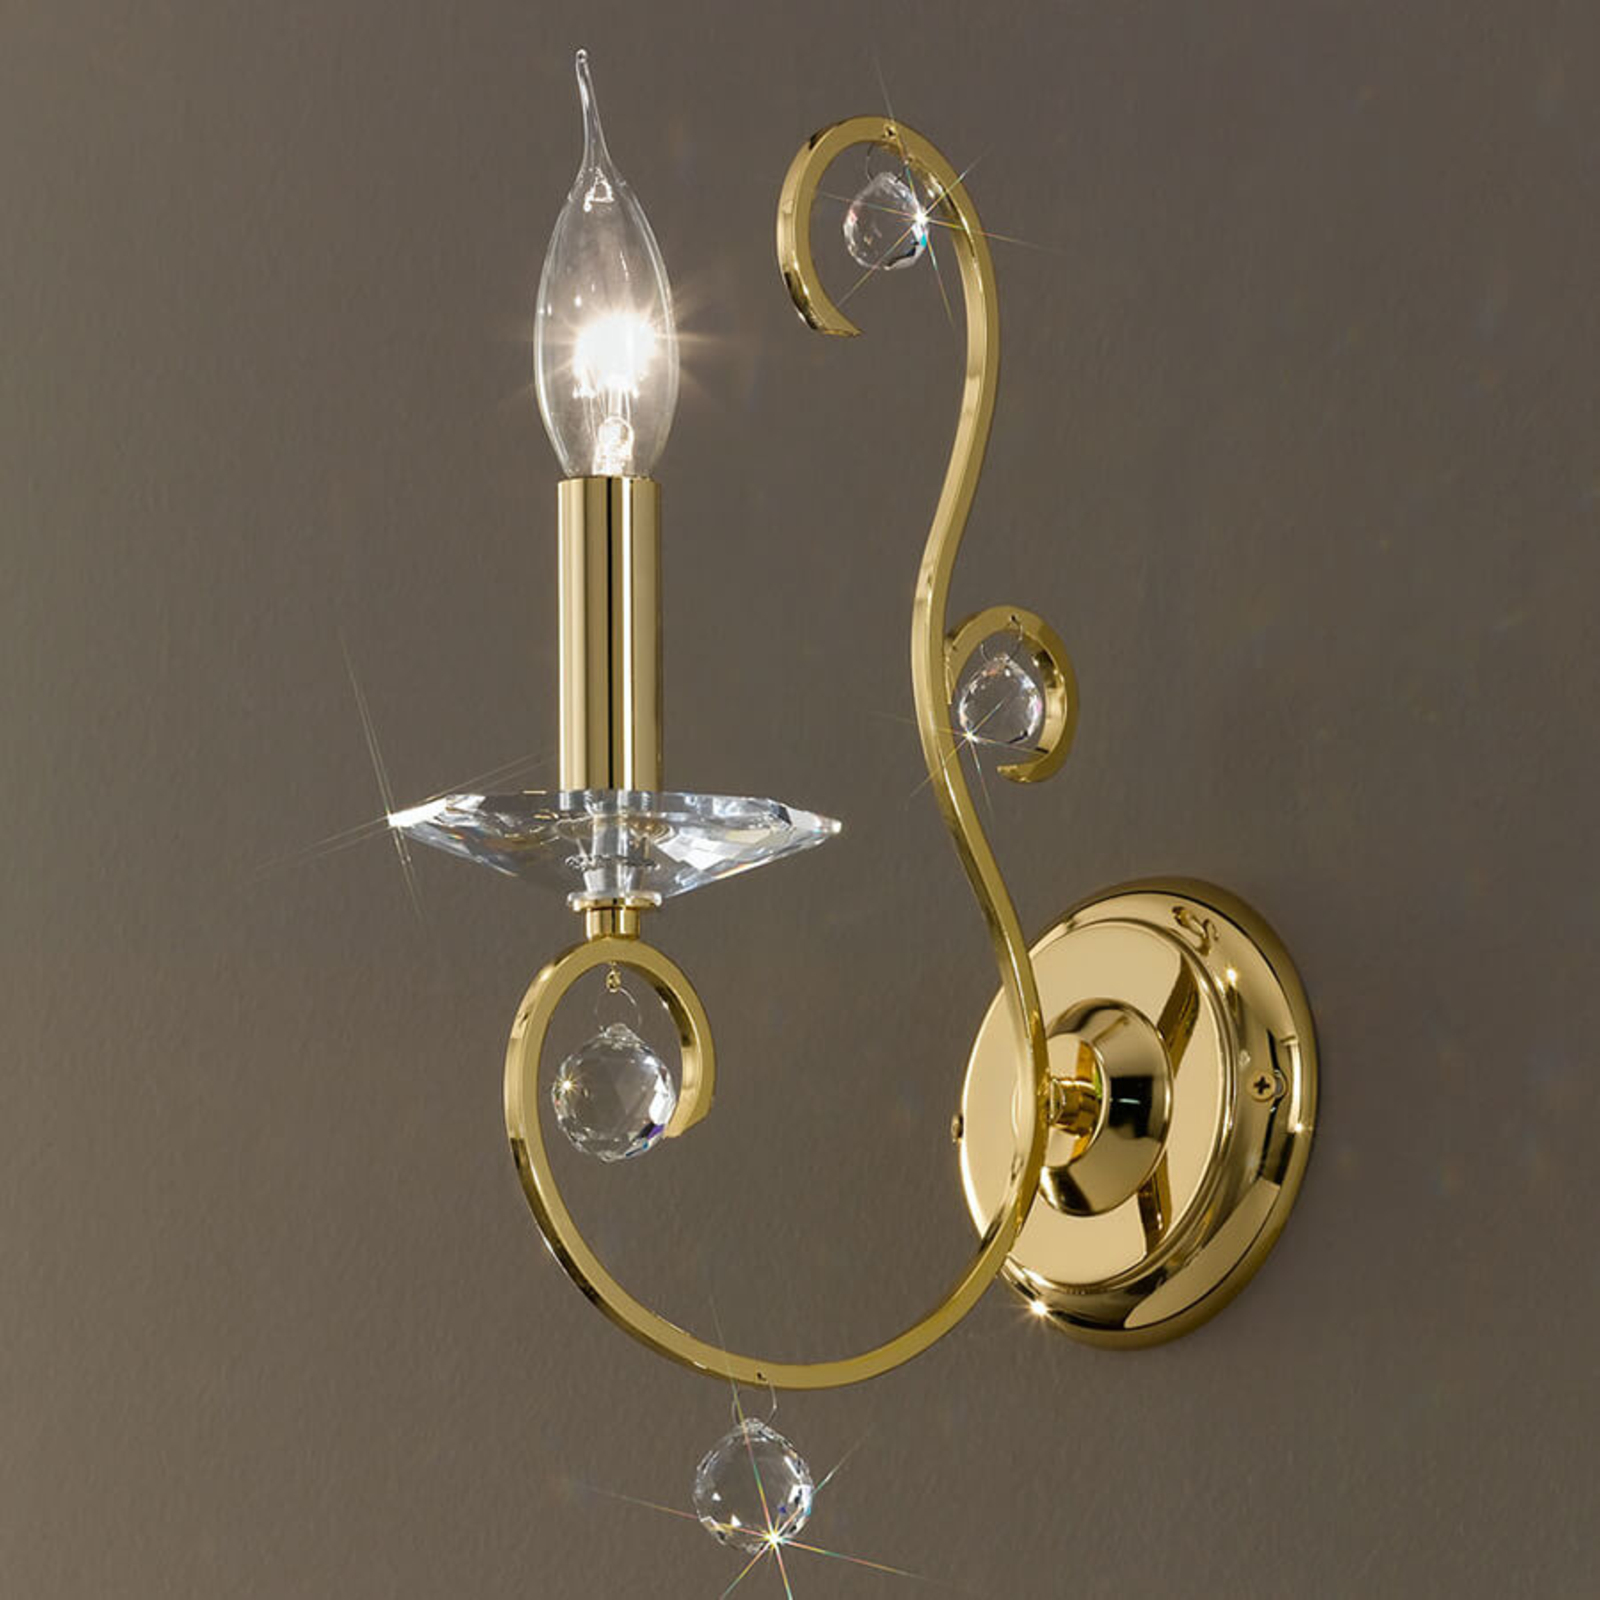 KOLARZ Carat - elegant wall light, gold-plated